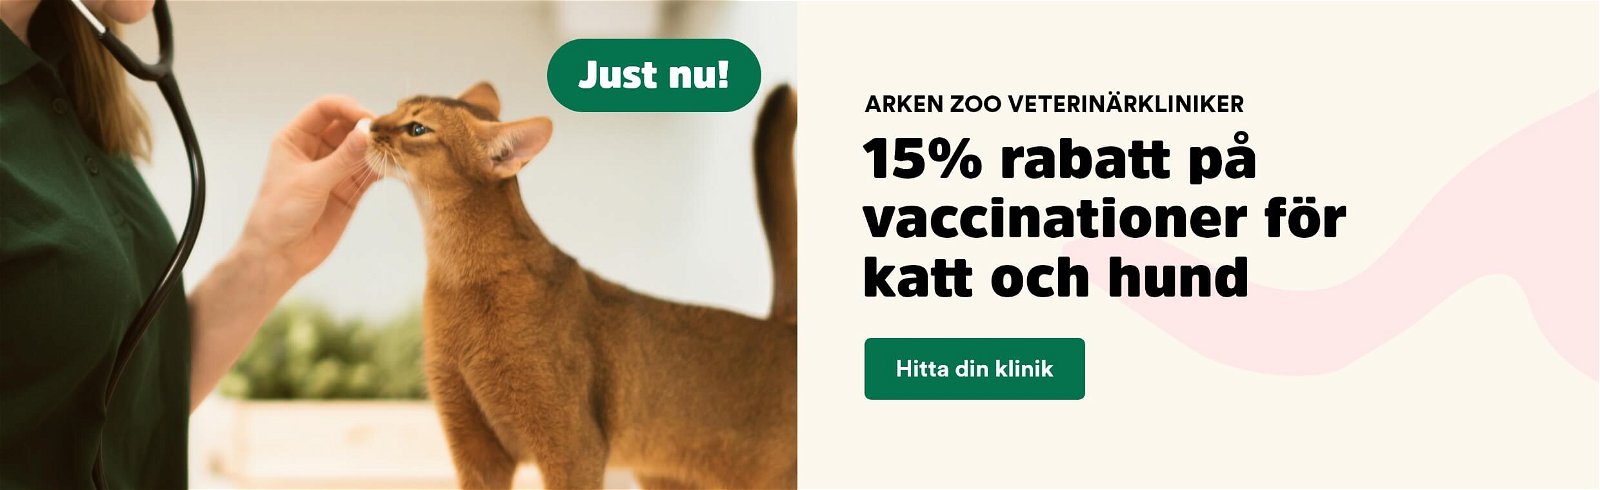 Arken Zoo Veterinärklinik kampanj